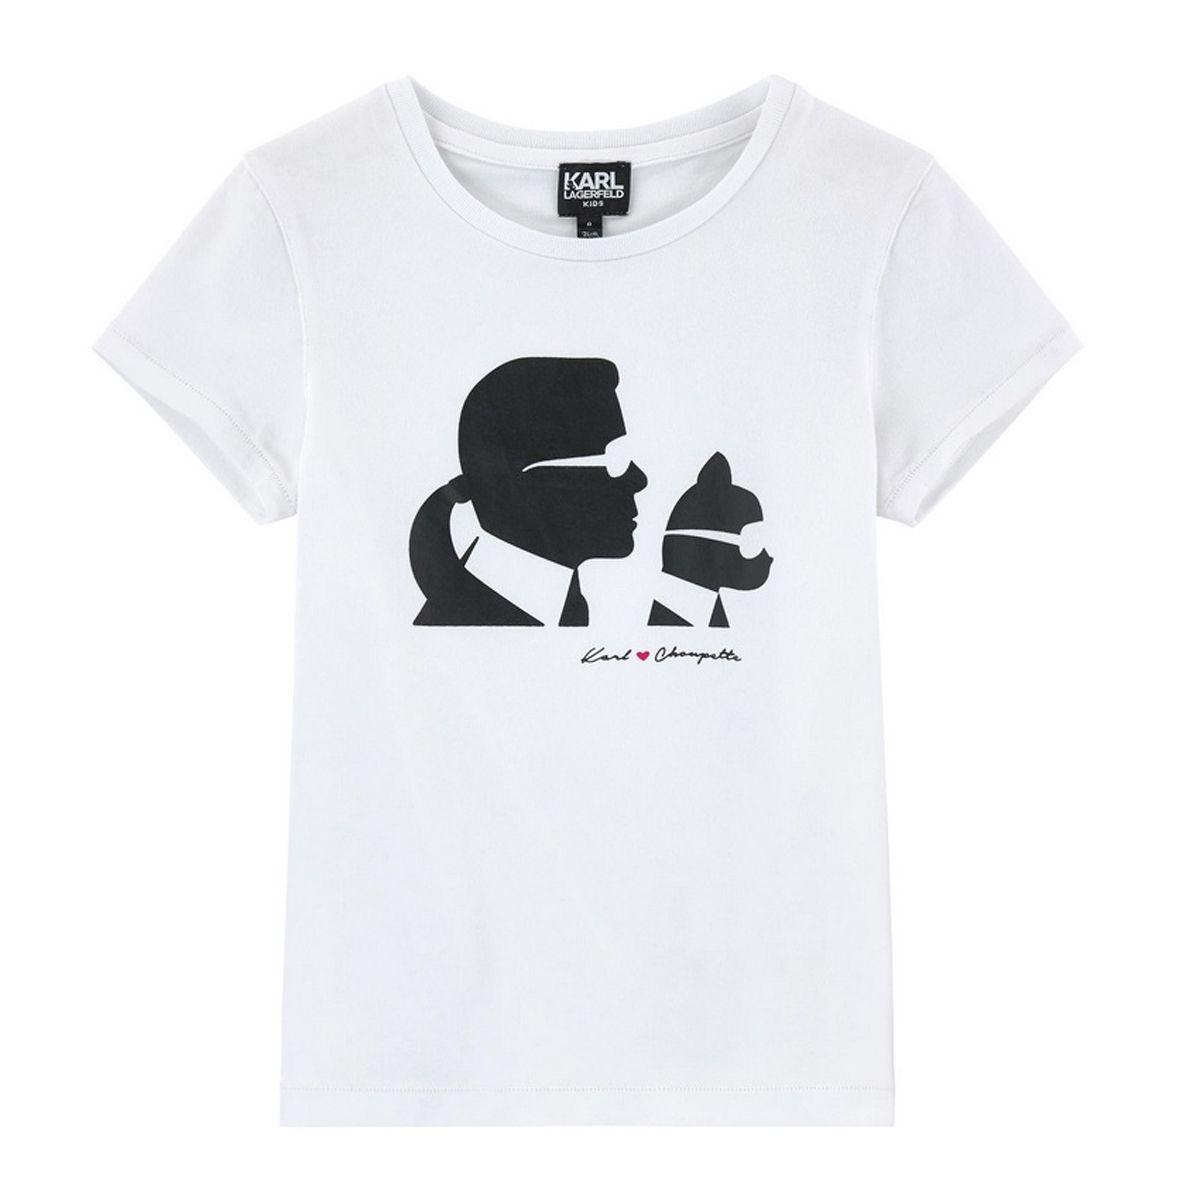 Karl Lagerfeld ahora diseña para niños: camiseta blanca